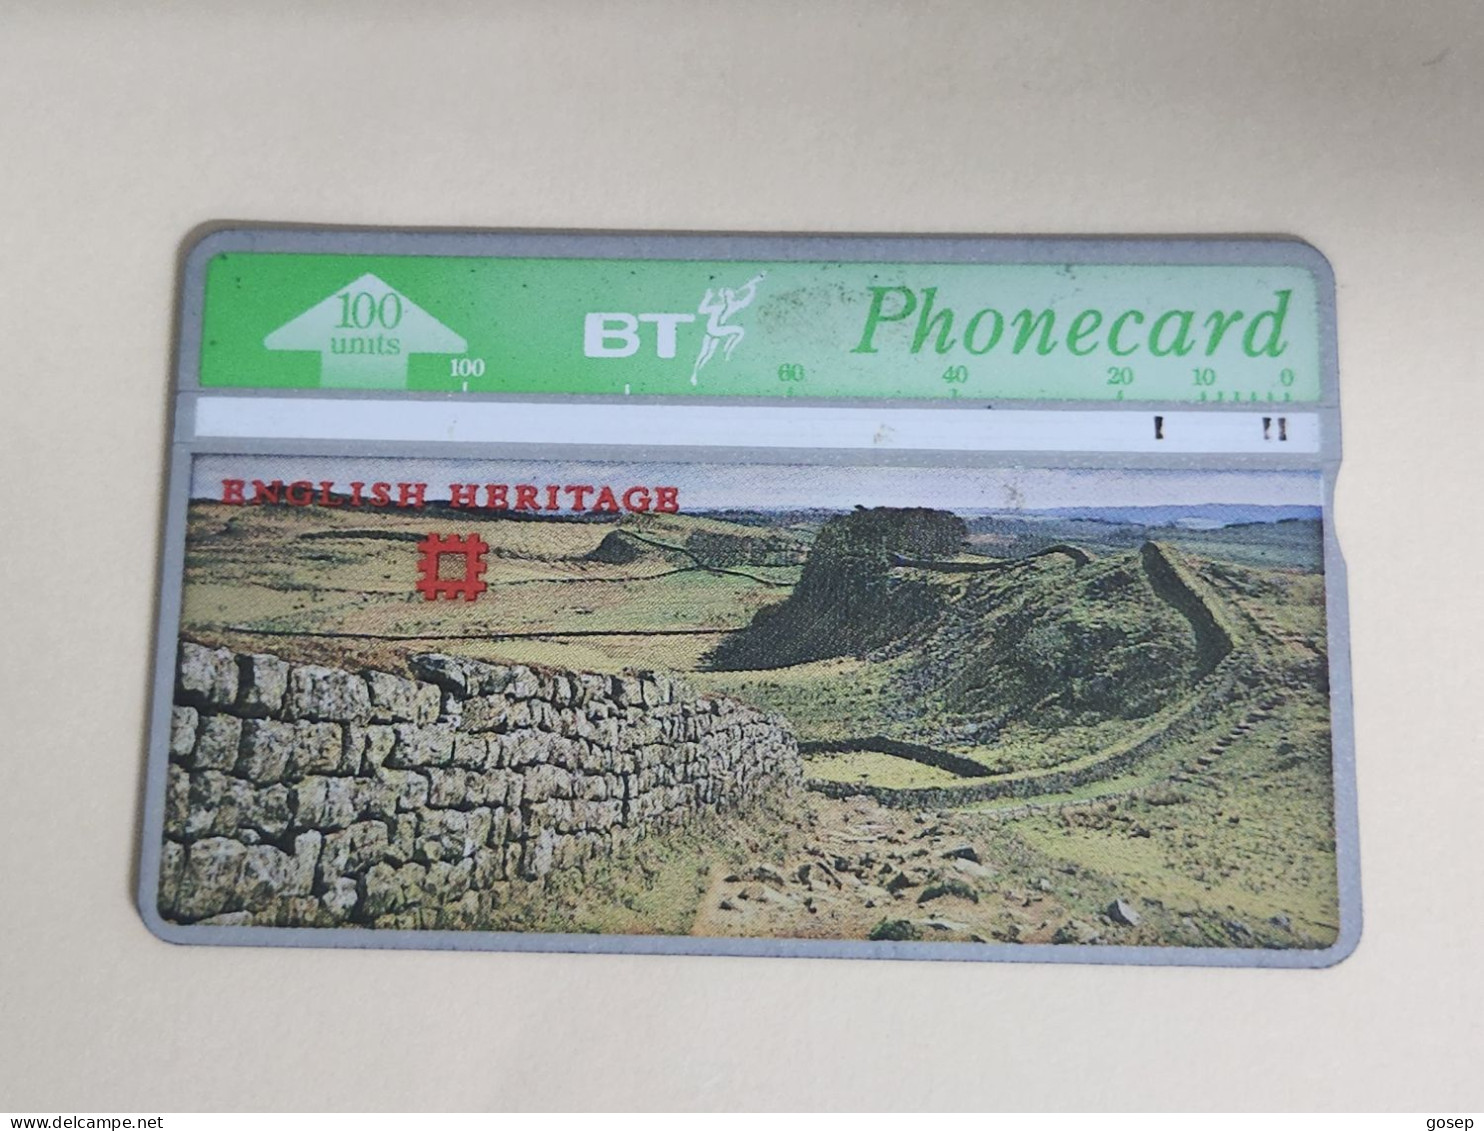 United Kingdom-(BTA117)HERITAGE-Hadrian's Wall-(203)(100units)(527G24931)price Cataloge3.00£-used+1card Prepiad Free - BT Werbezwecke